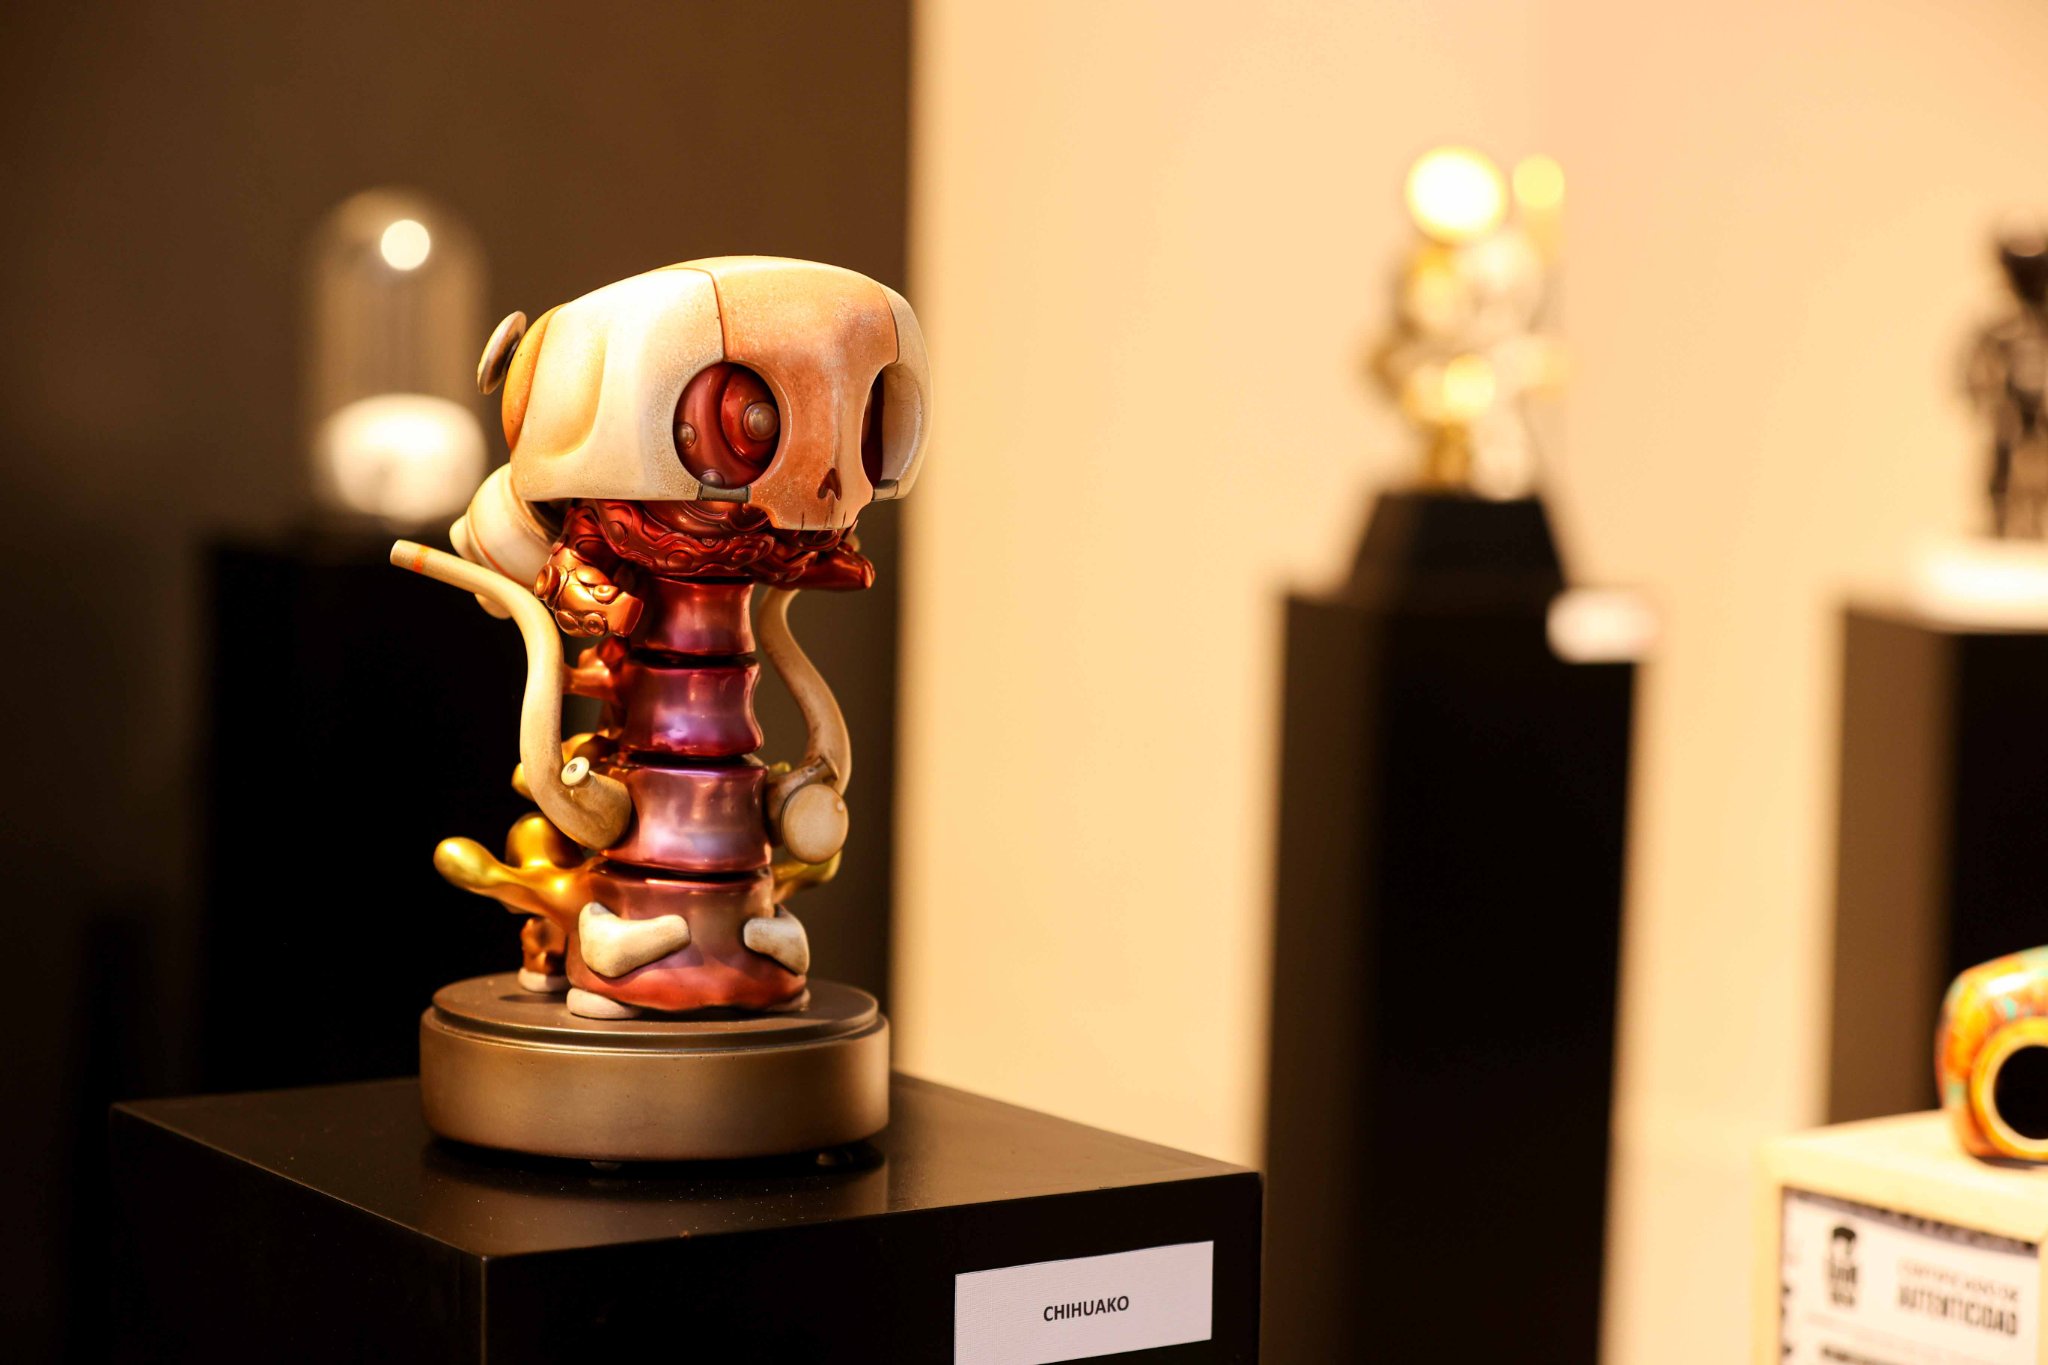 Folk Chamac presenta exposición “Umaoksa” en Galería Indigo